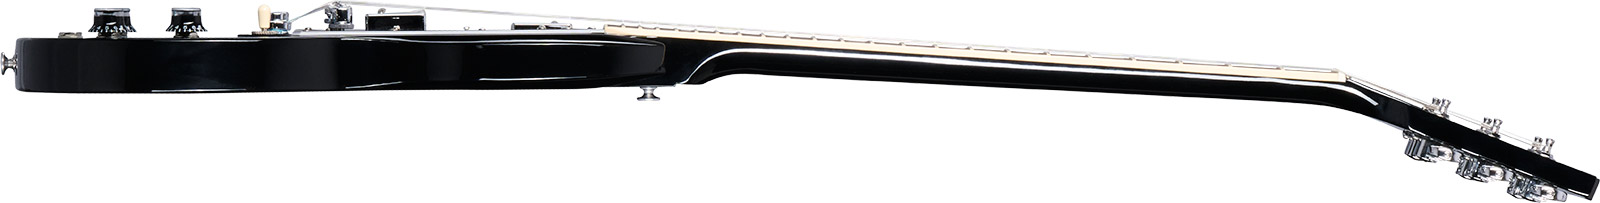 Gibson Sg Standard Custom Color 2h Ht Rw - Pelham Blue Burst - Double cut electric guitar - Variation 2